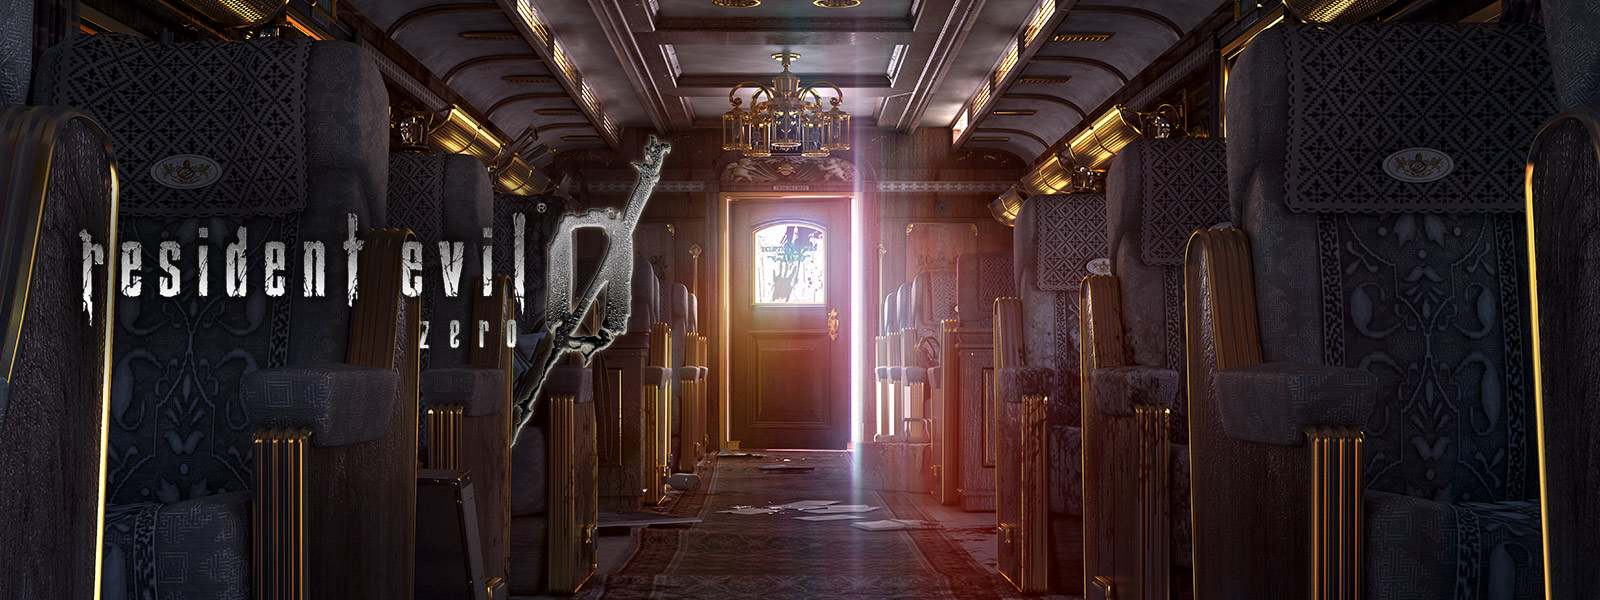 Resident Evil 0, screenshot of fancy train car interior